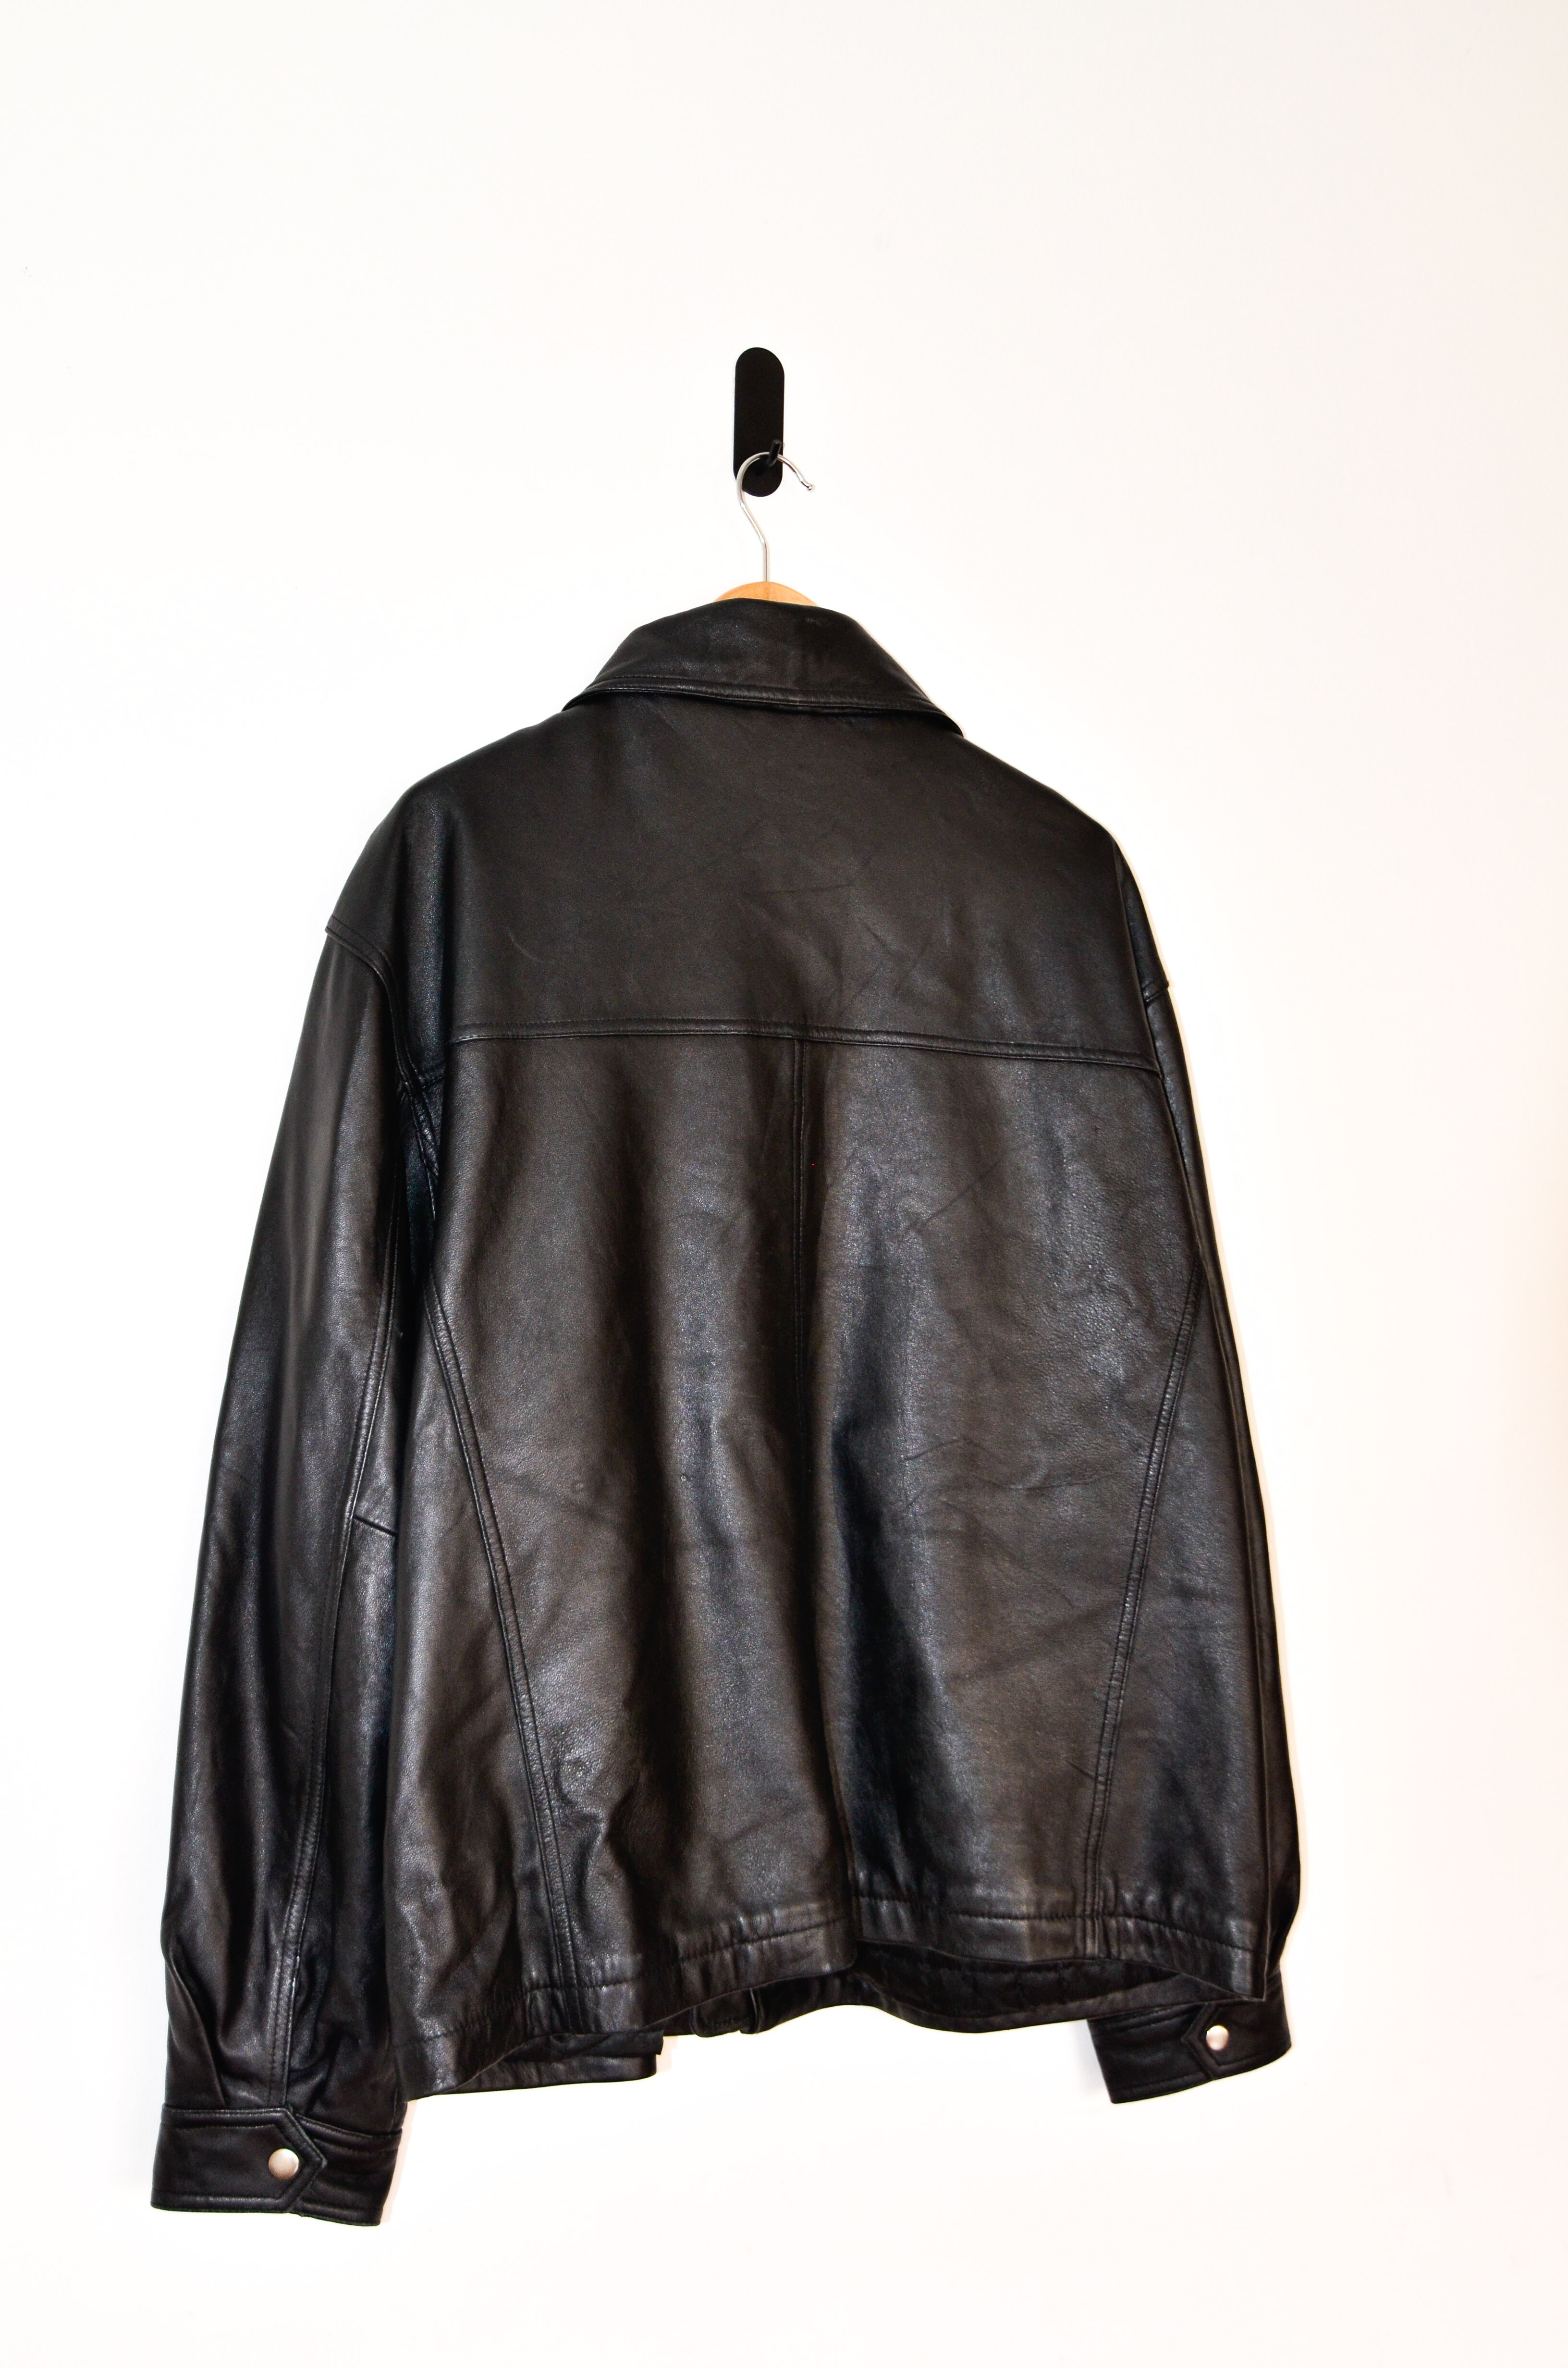 Chaqueta black leather 90s